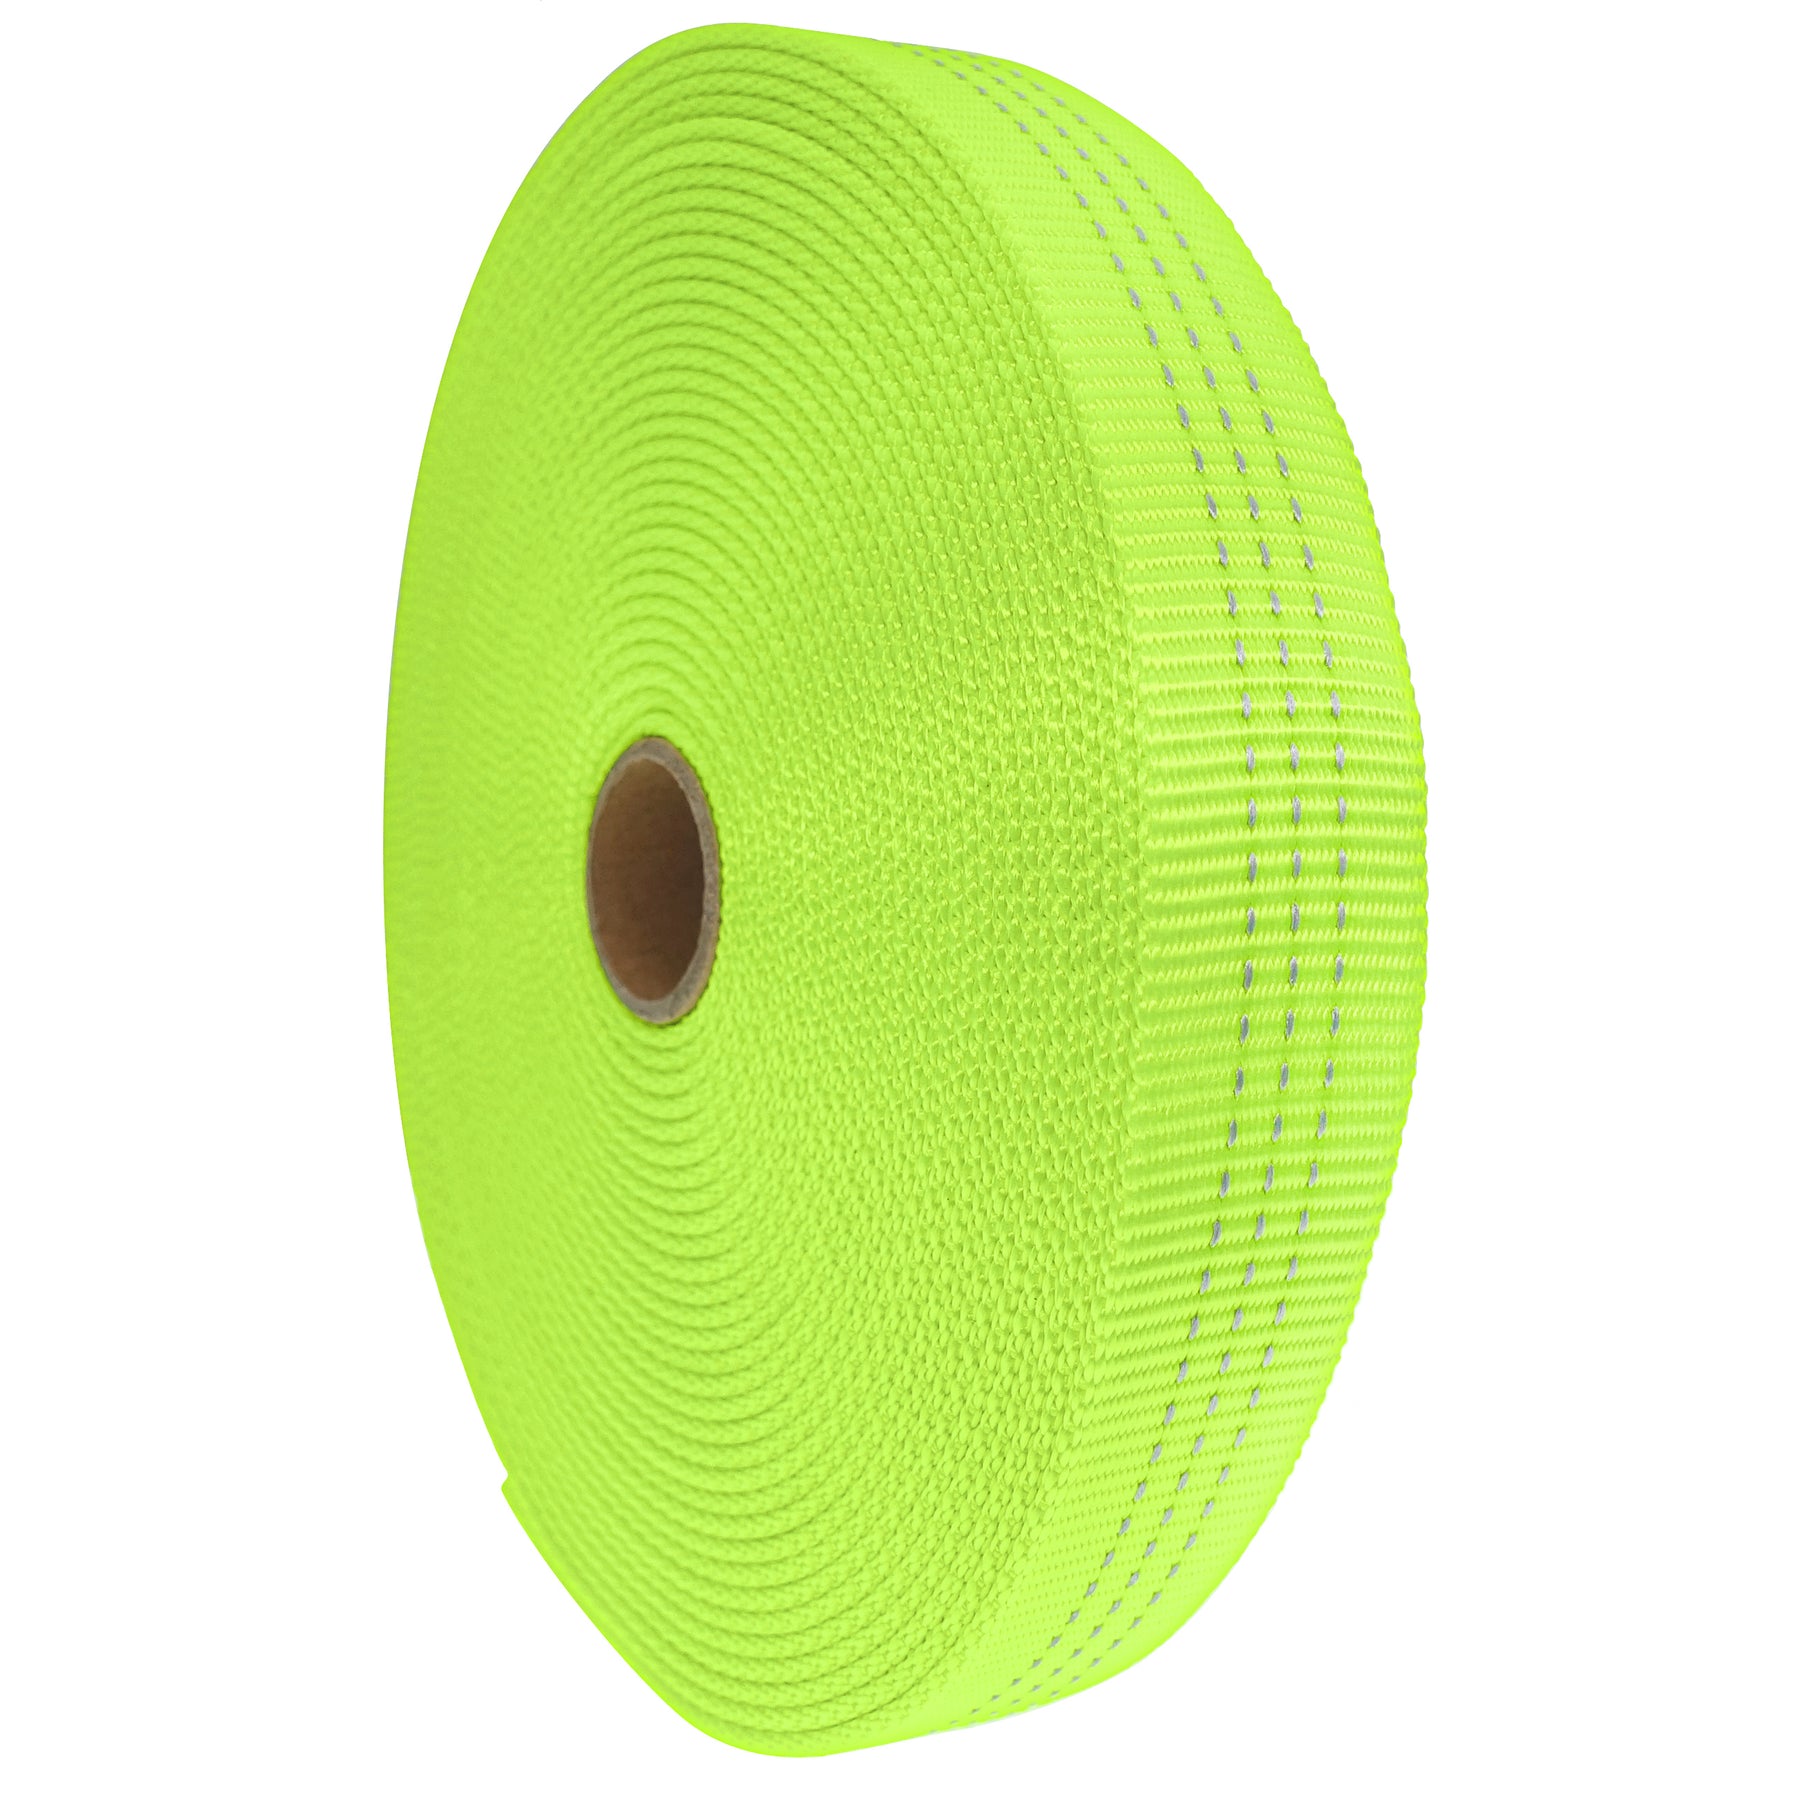 Buy 1 inch x 10 yards Tubular Webbing Camouflage Green Online